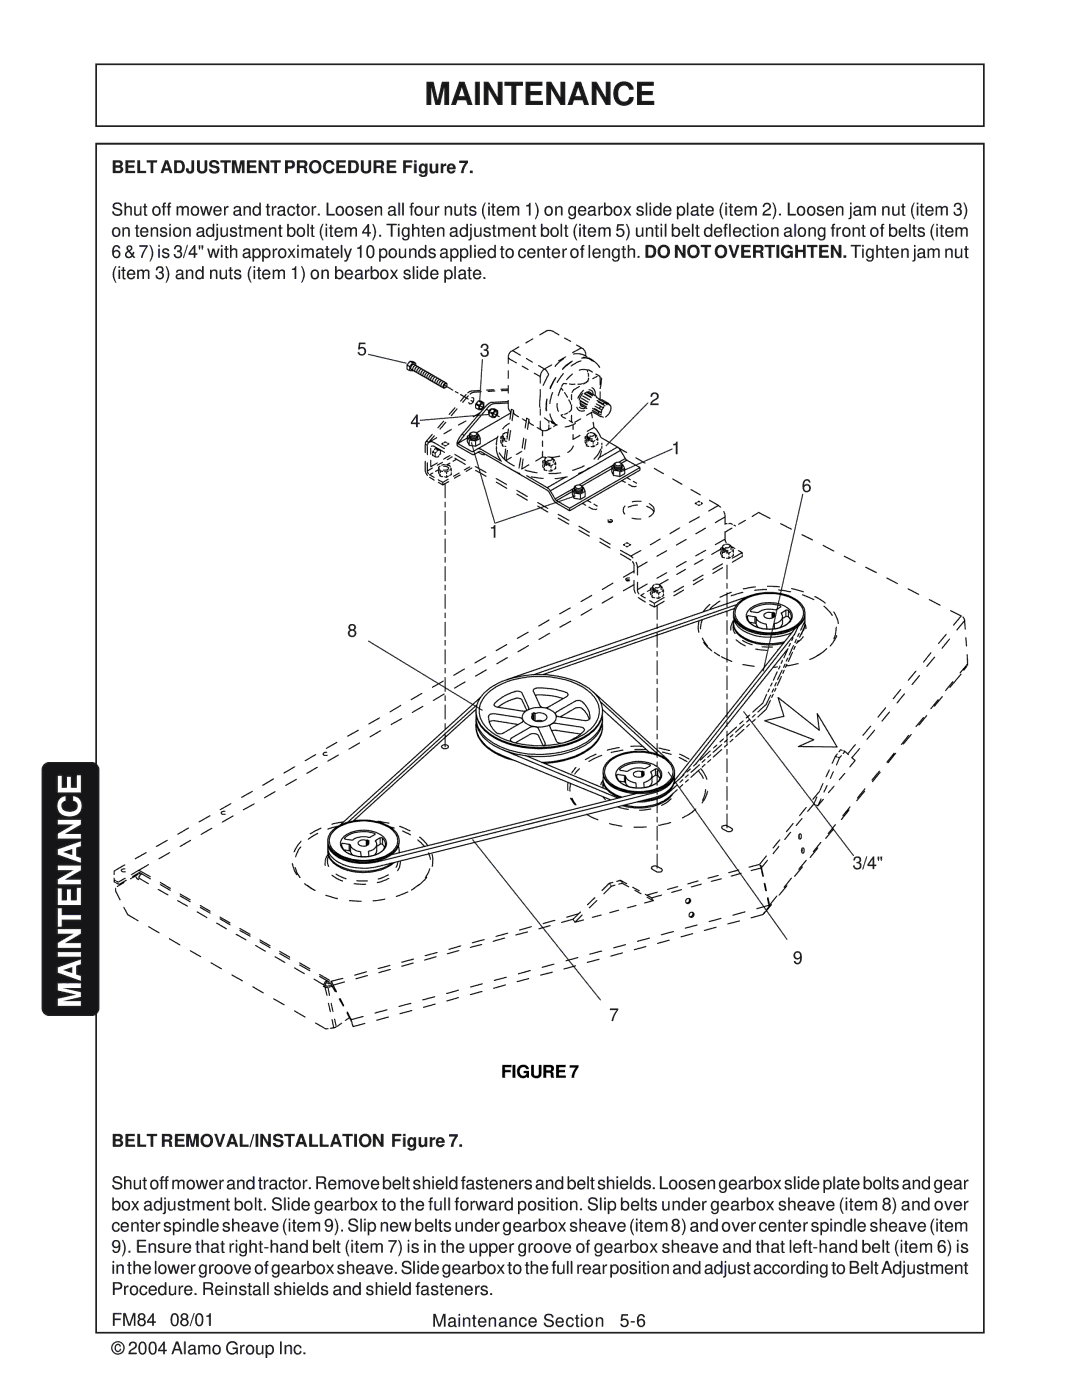 Servis-Rhino FM84 manual Belt Adjustment Procedure Figure 